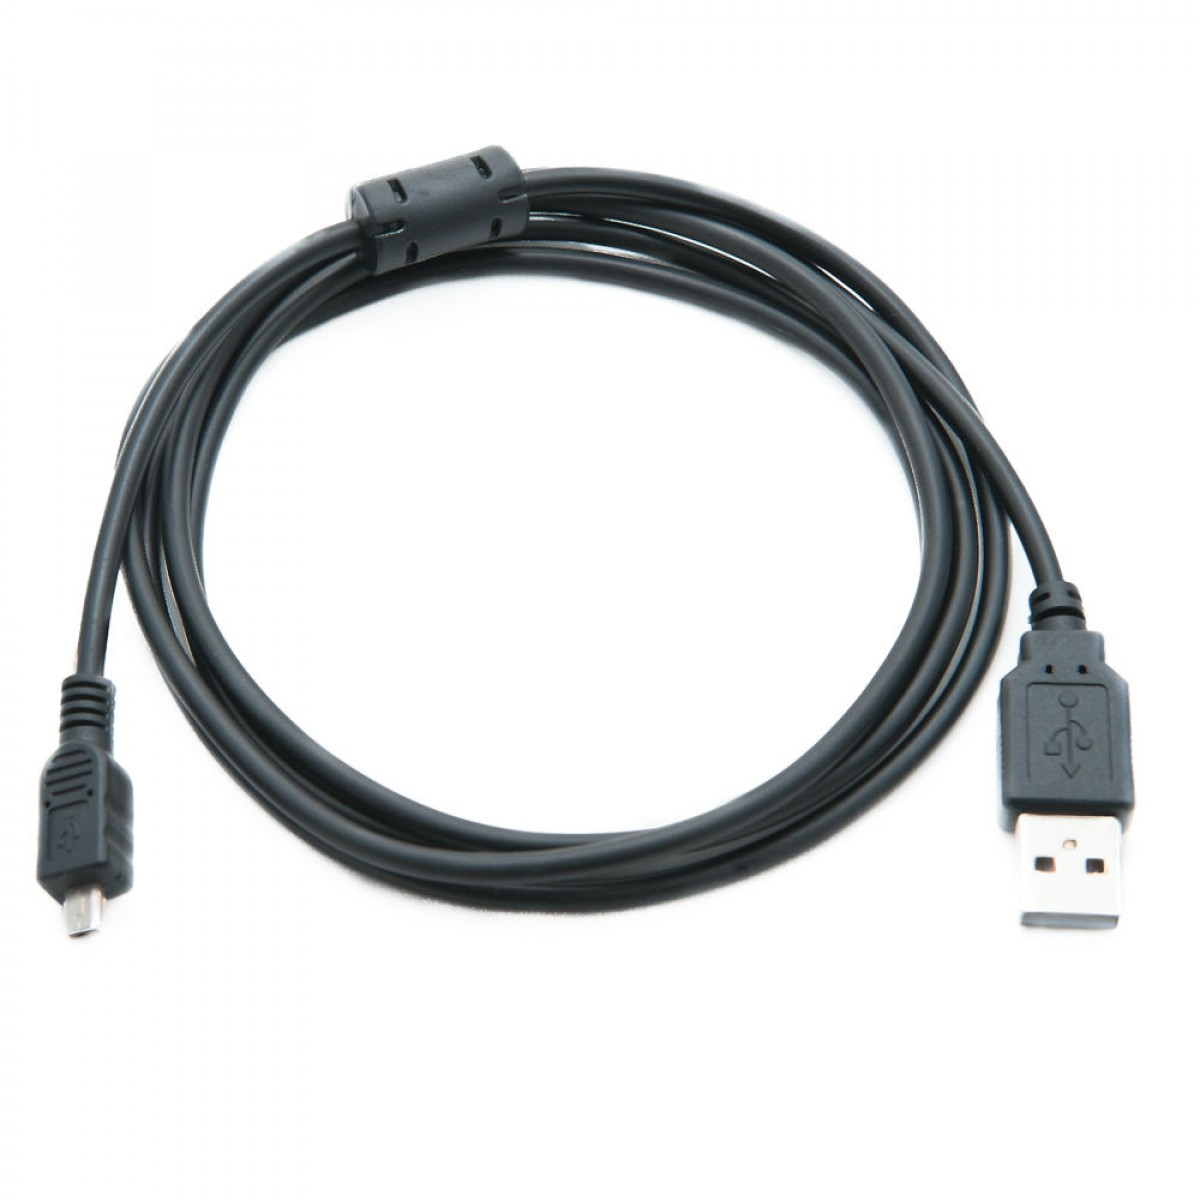 DMC-FS7 cámara USB Data Sync Cable para computadora. Panasonic Lumix DMC-FS5 